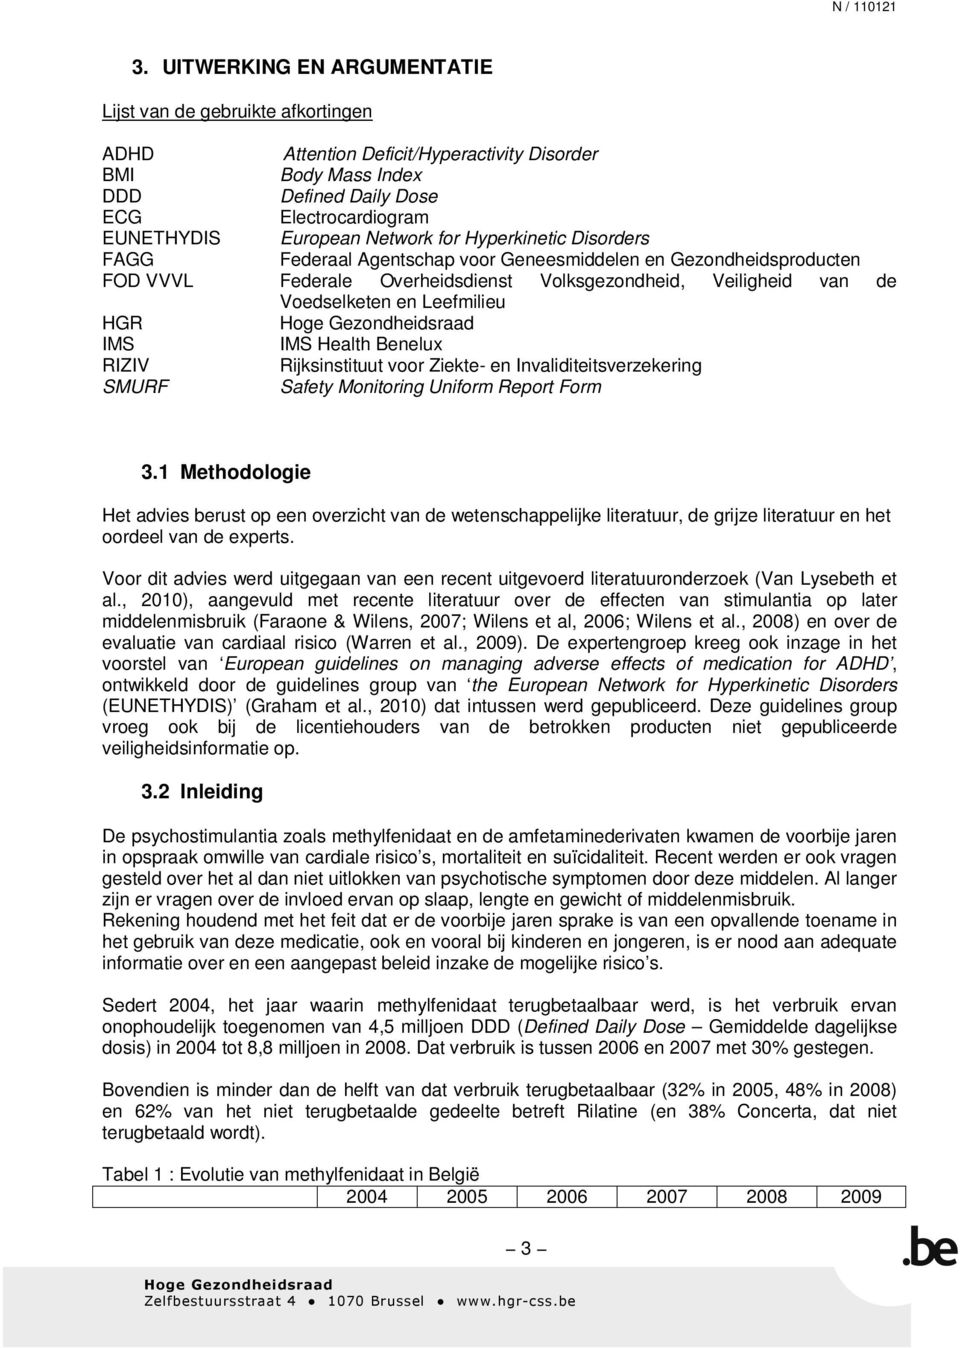 HGR IMS IMS Health Benelux RIZIV Rijksinstituut voor Ziekte- en Invaliditeitsverzekering SMURF Safety Monitoring Uniform Report Form 3.